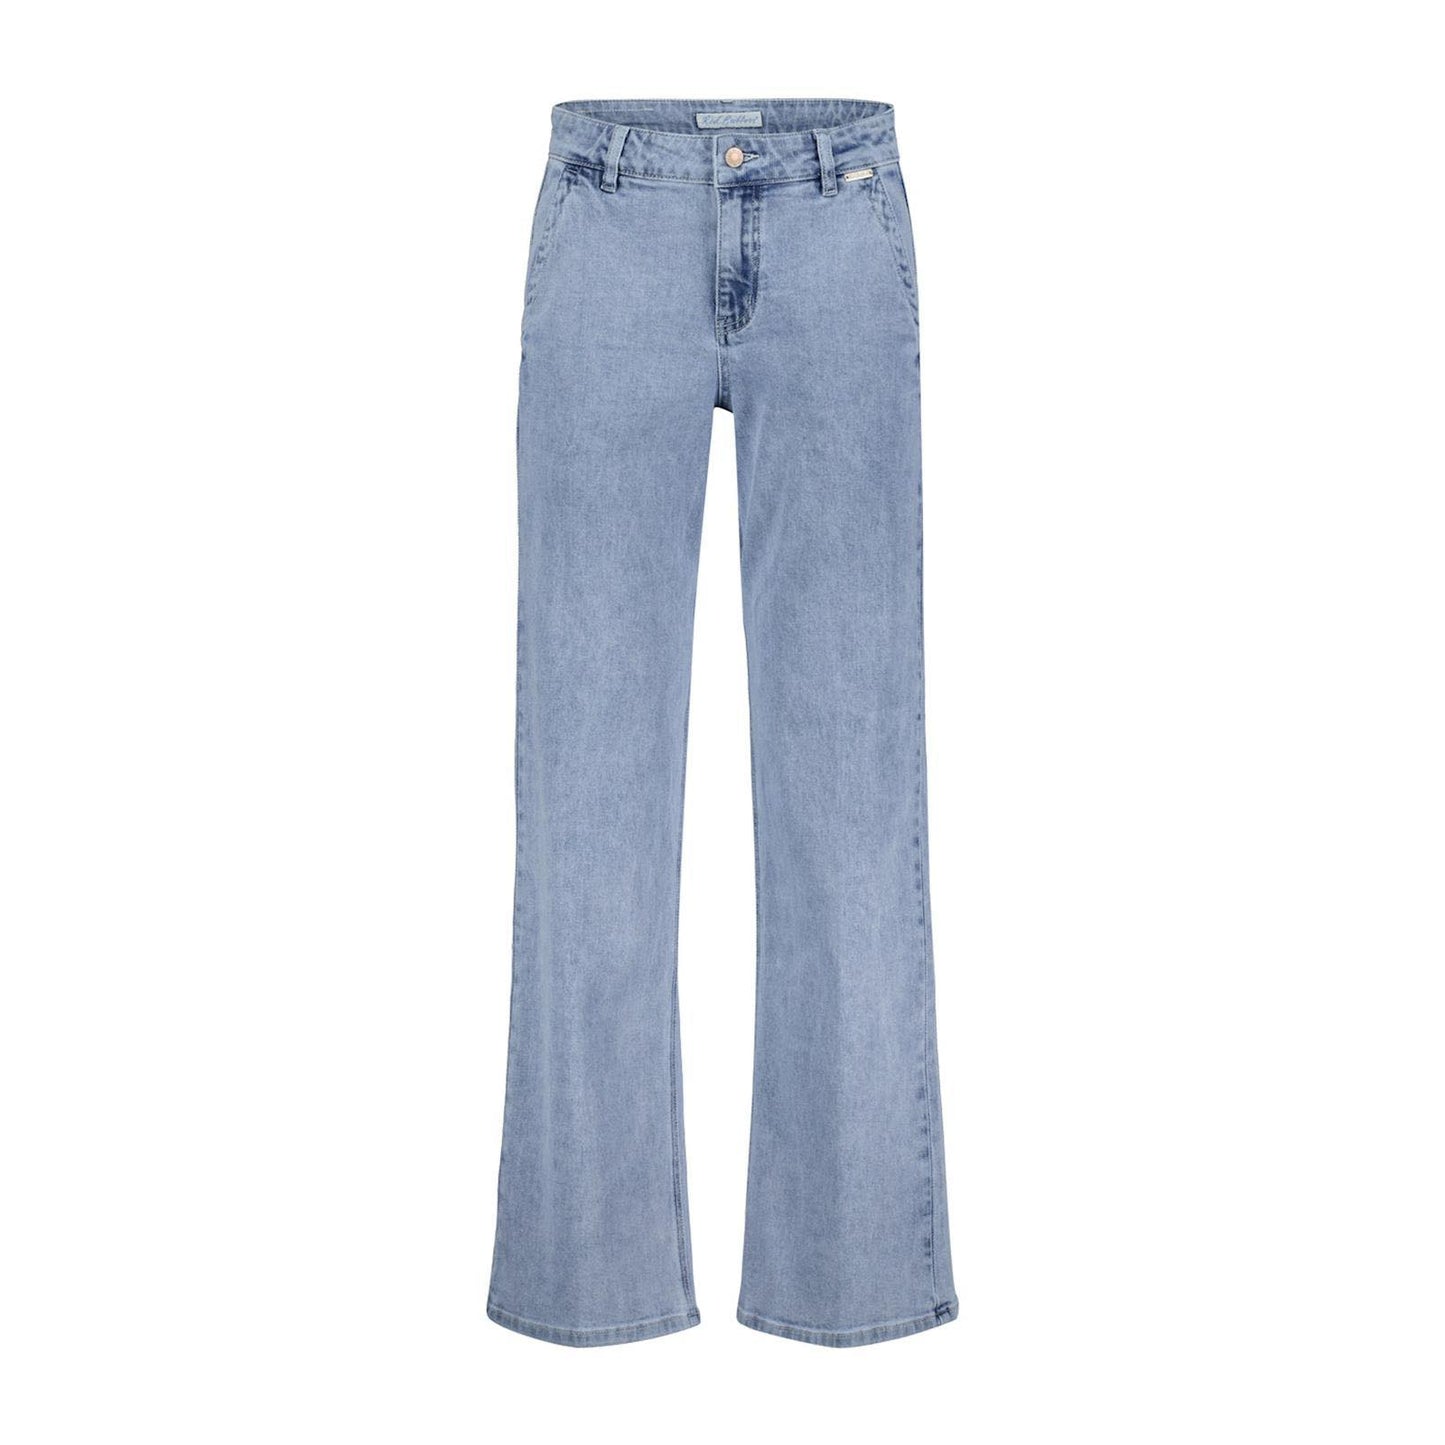 Colette Bleach Denim Jeans